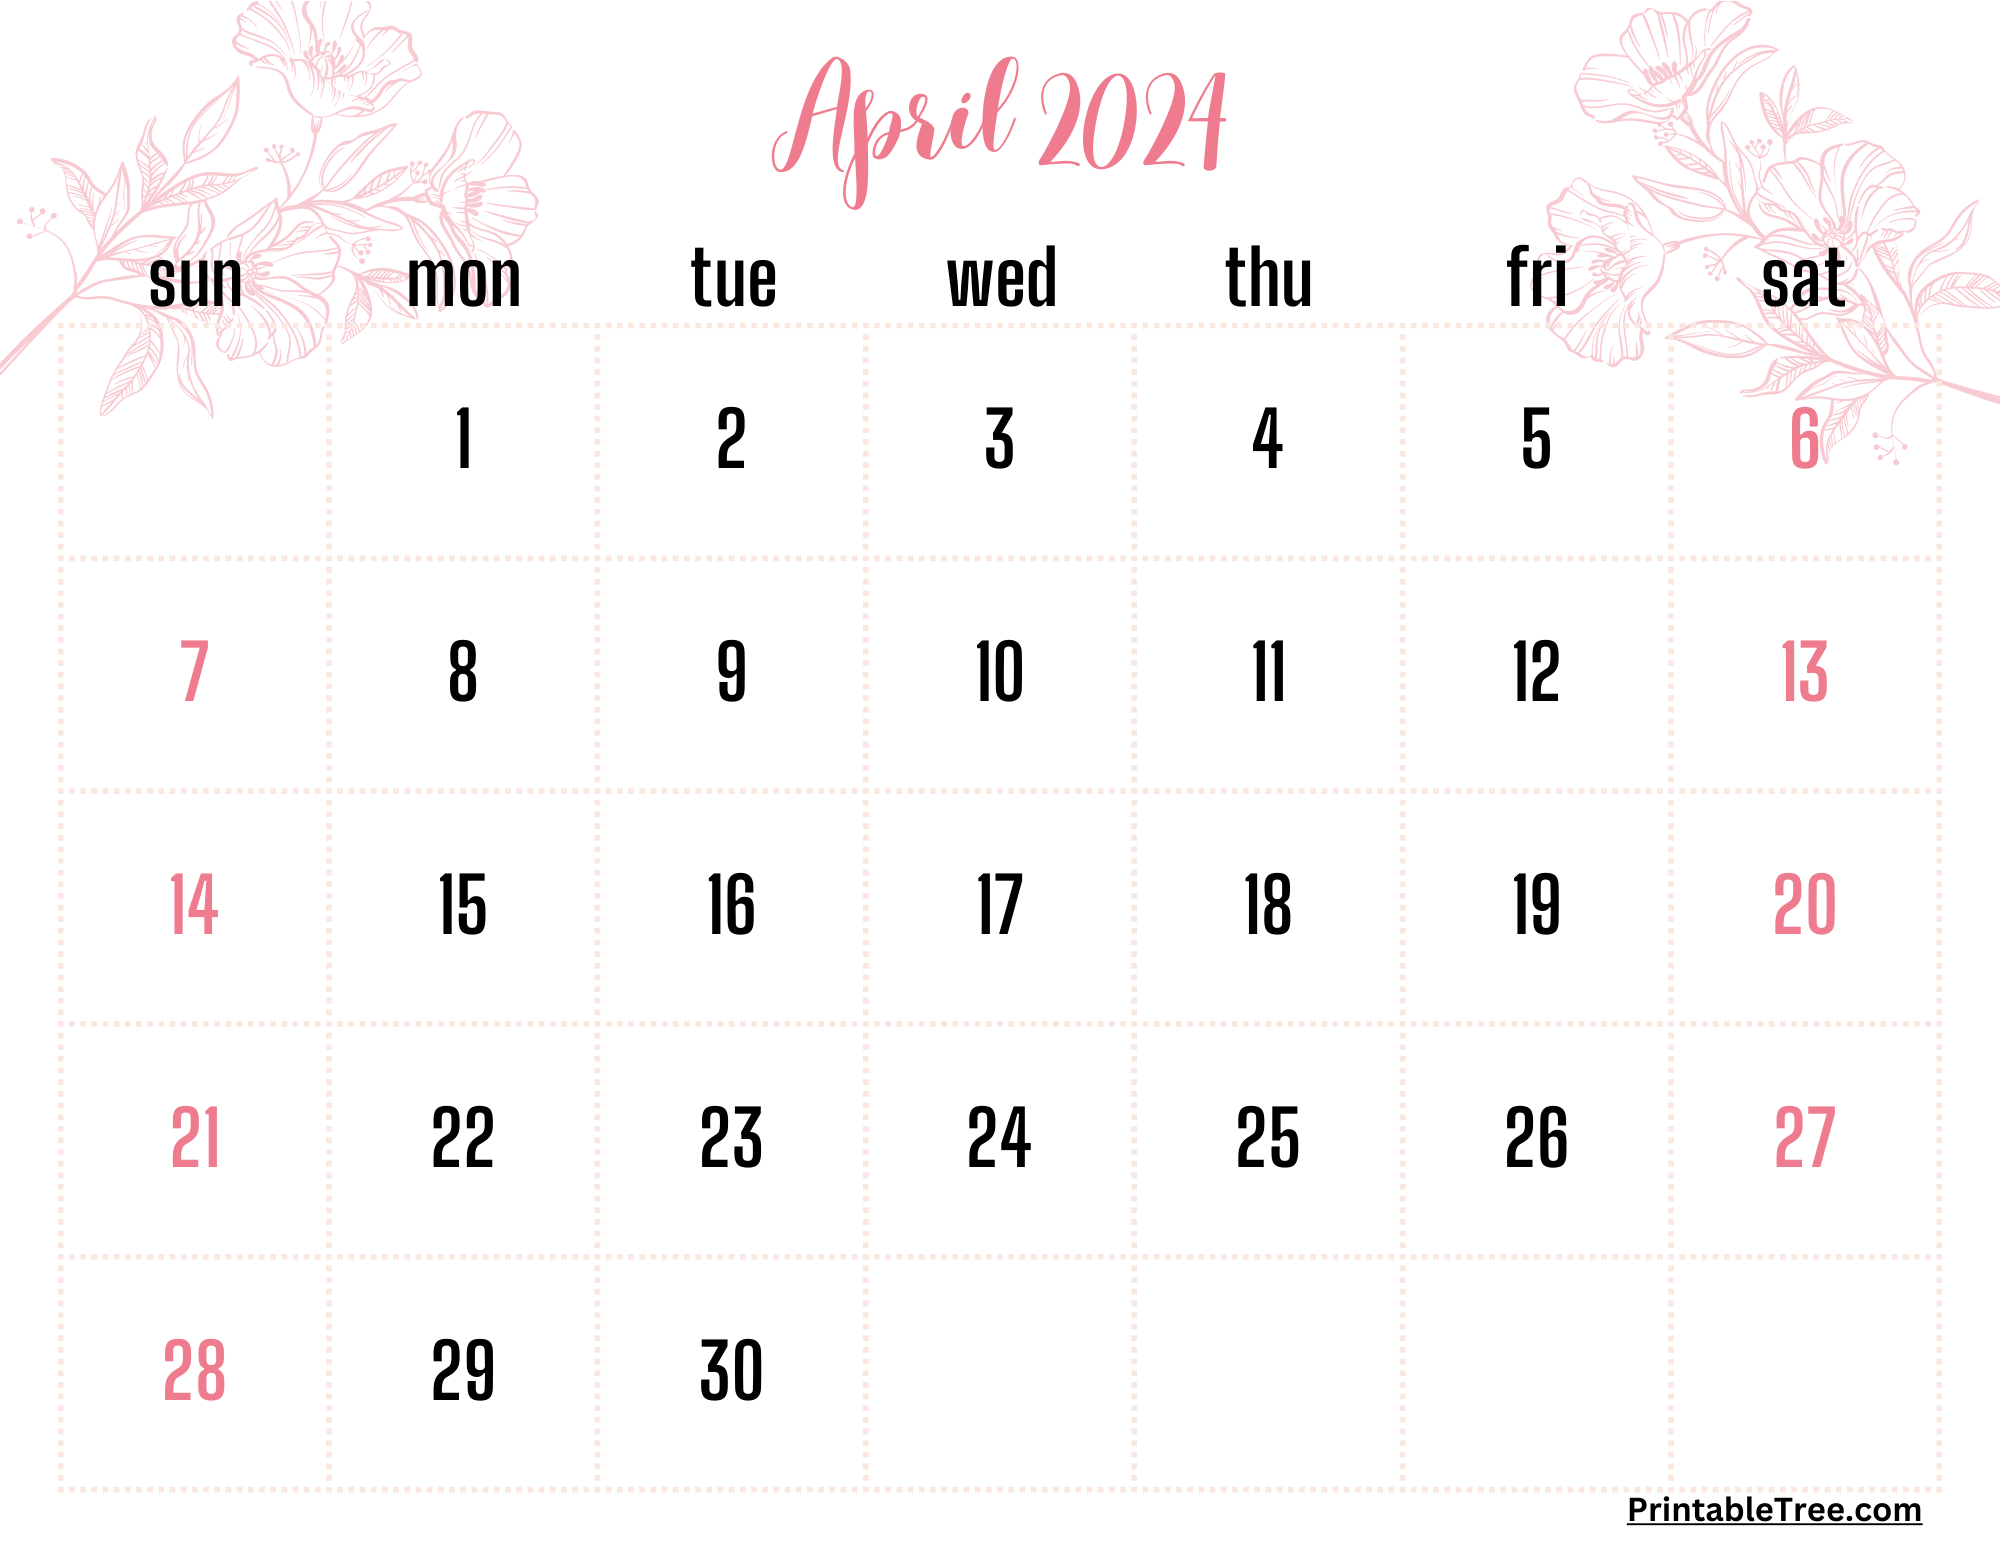 Blank April 2024 Calendar Printable PDF Template With Holidays